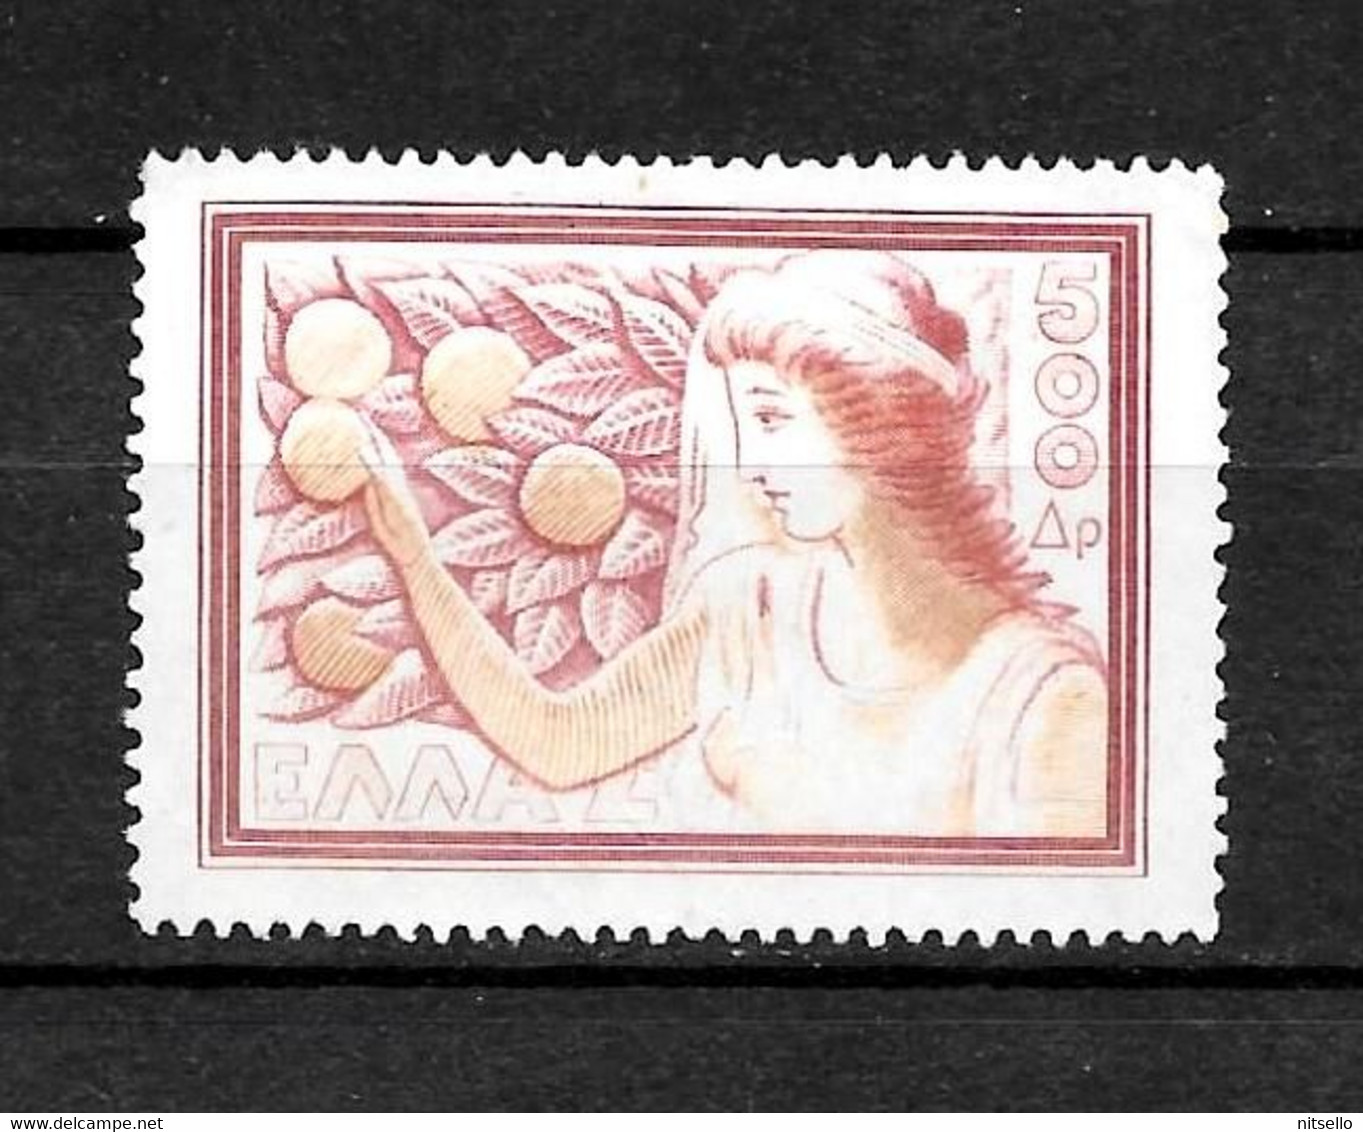 LOTE 2225 /// GRECIA    YVERT Nº 585 **MNH  ¡¡¡ OFERTA - LIQUIDATION !!! JE LIQUIDE !!! - Unused Stamps